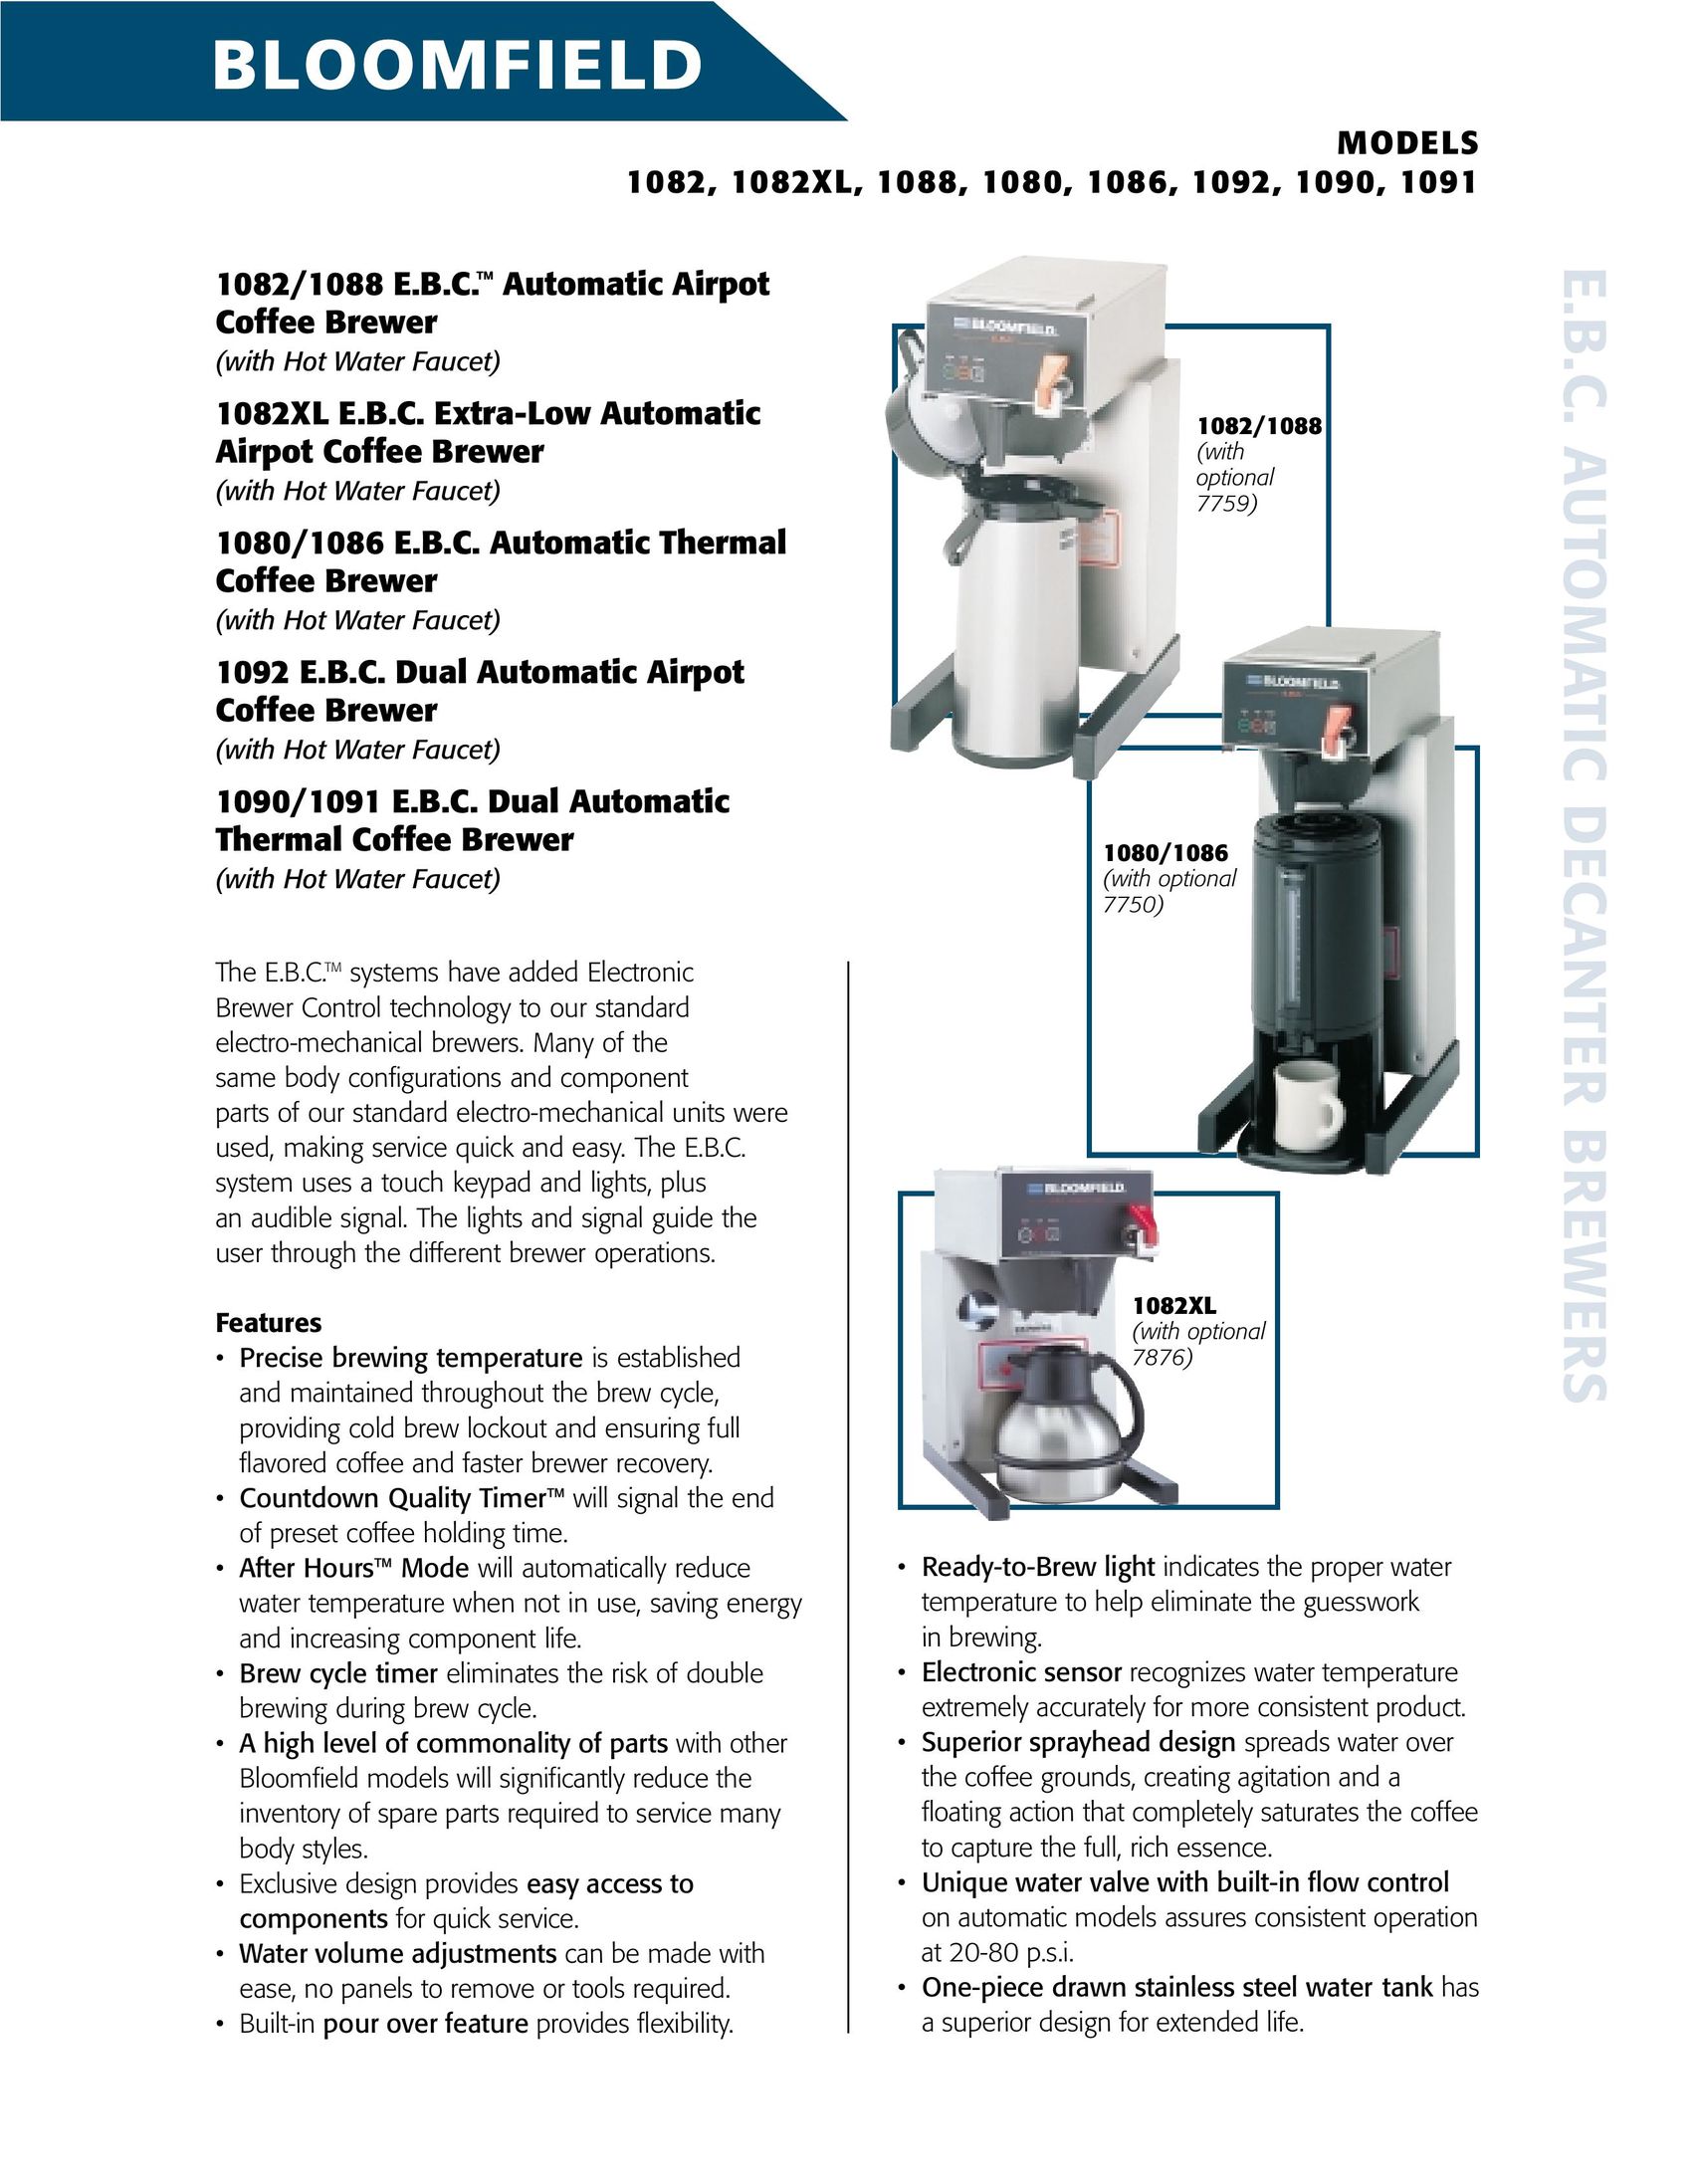 Bloomfield 1091 Coffeemaker User Manual